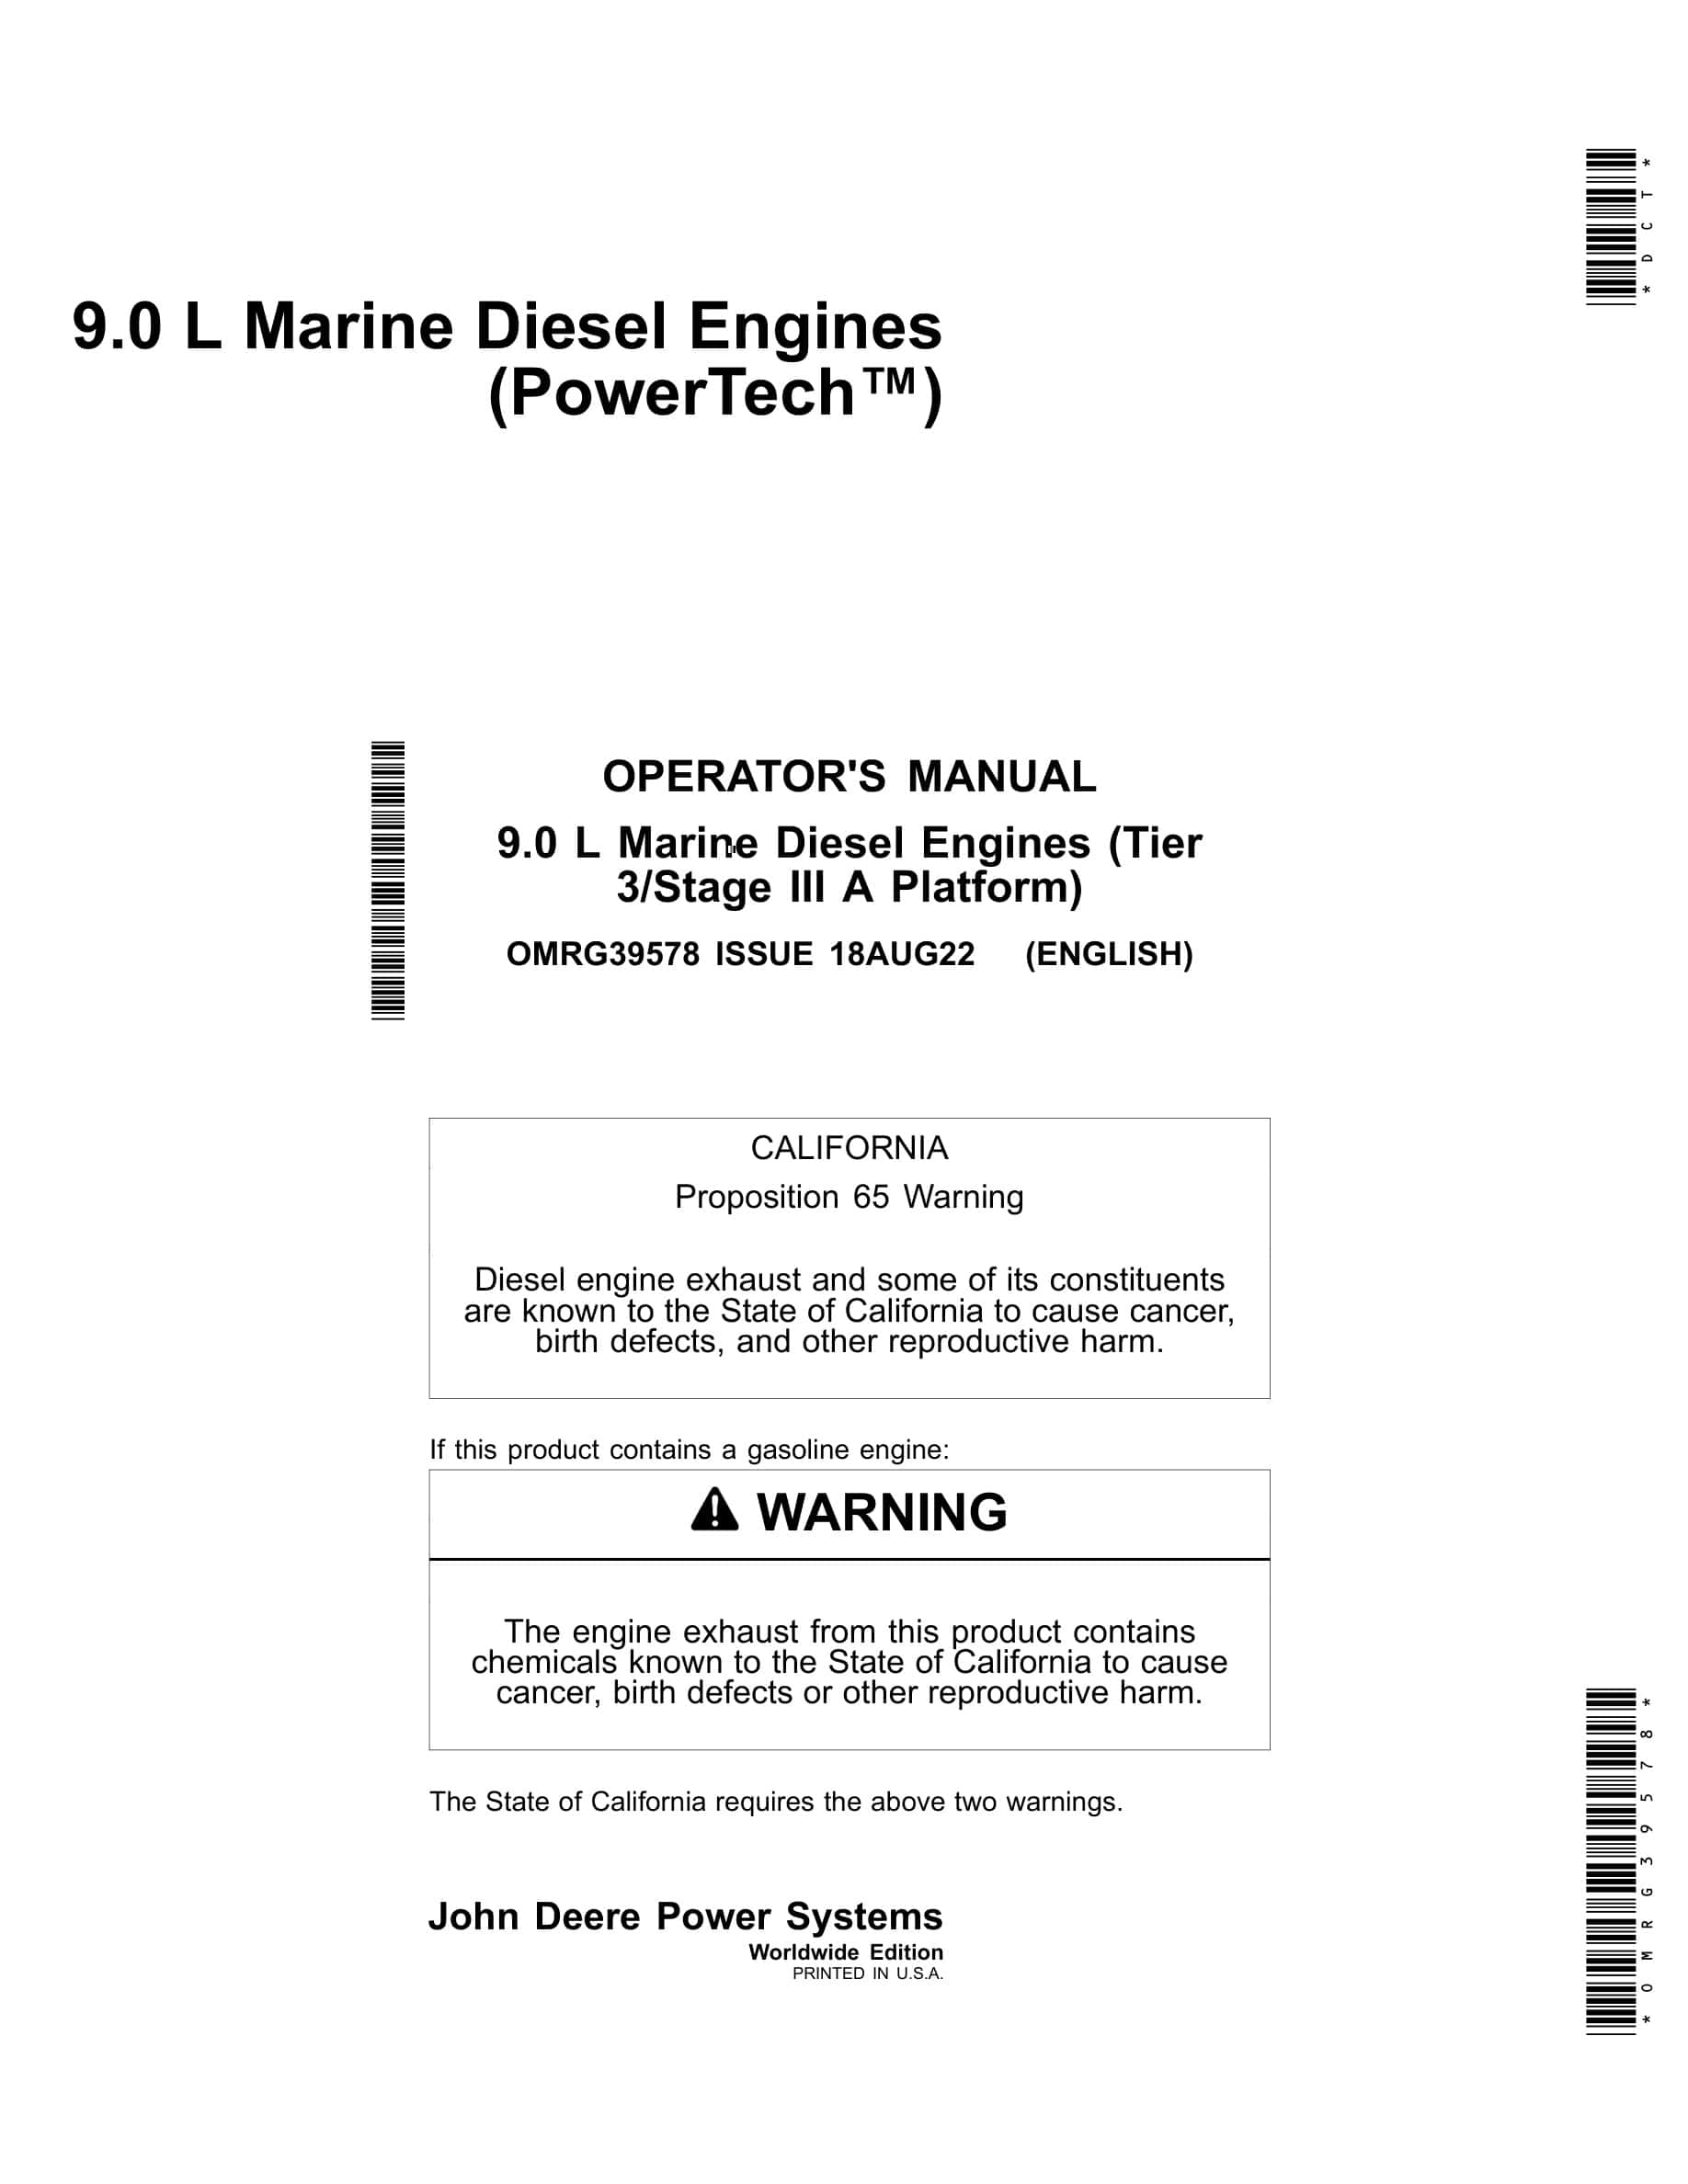 John Deere PowerTech 9.0 L (Tier 3 Stage III A Platform) Marine Diesel Engines Operator Manual OMRG39578-1